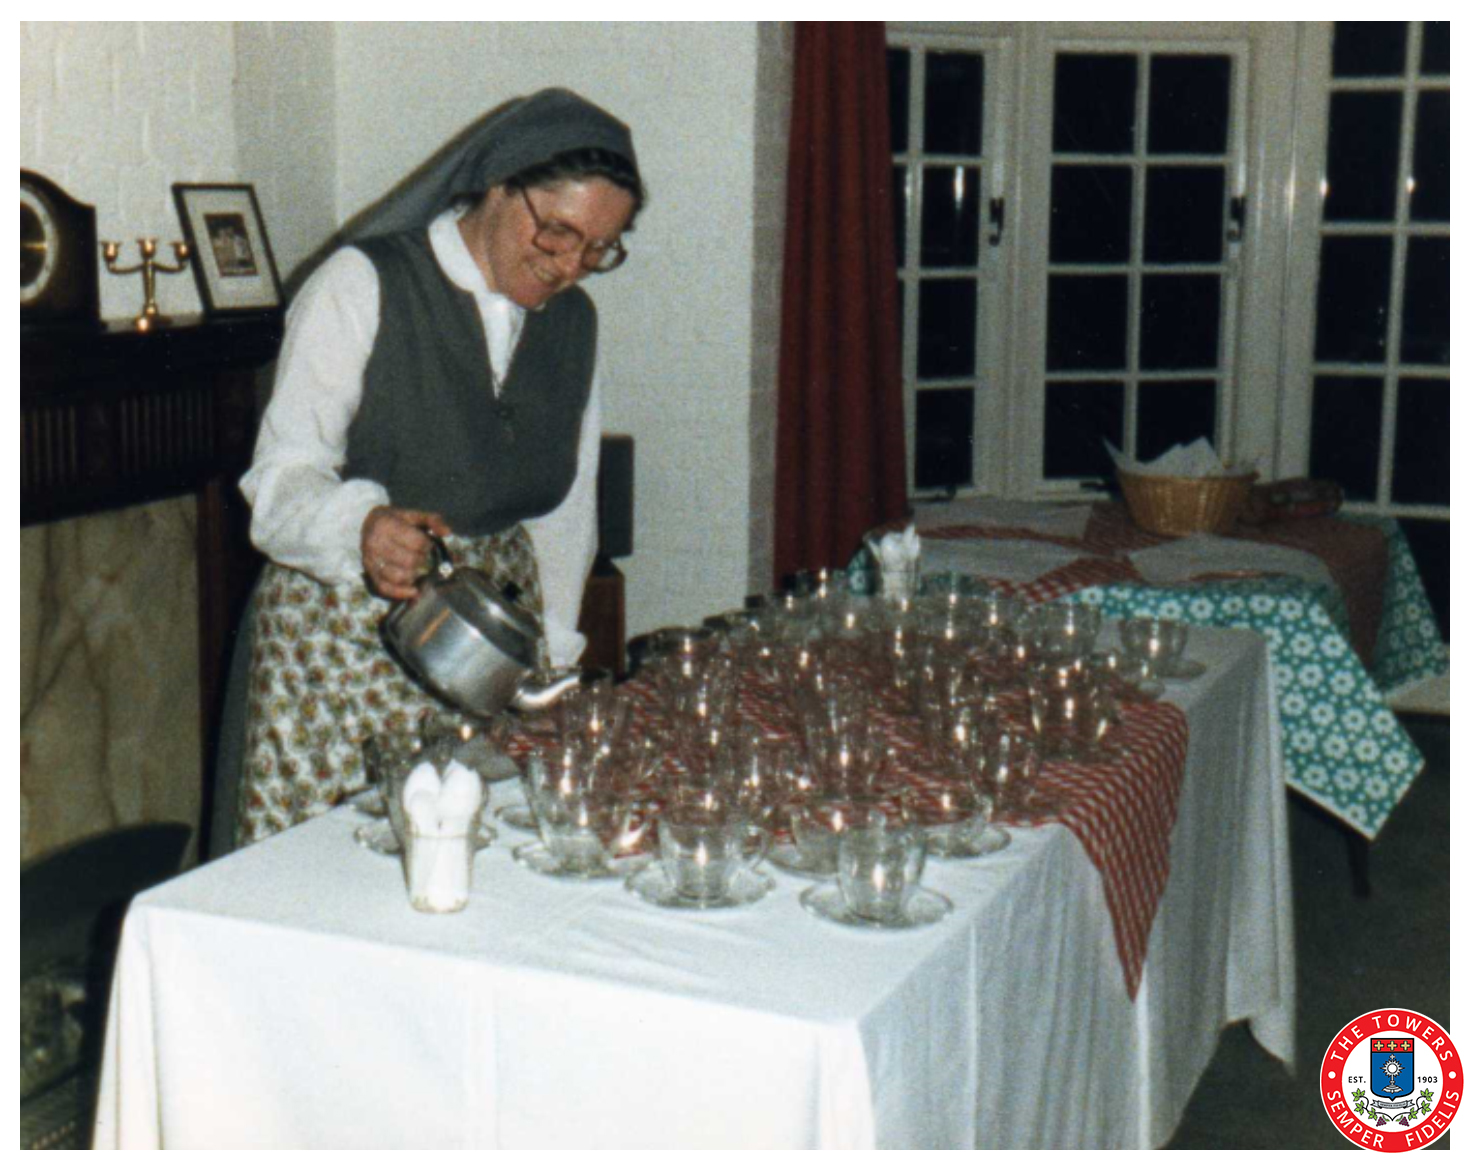 Sister Patricia Prepares A Coffee Morning